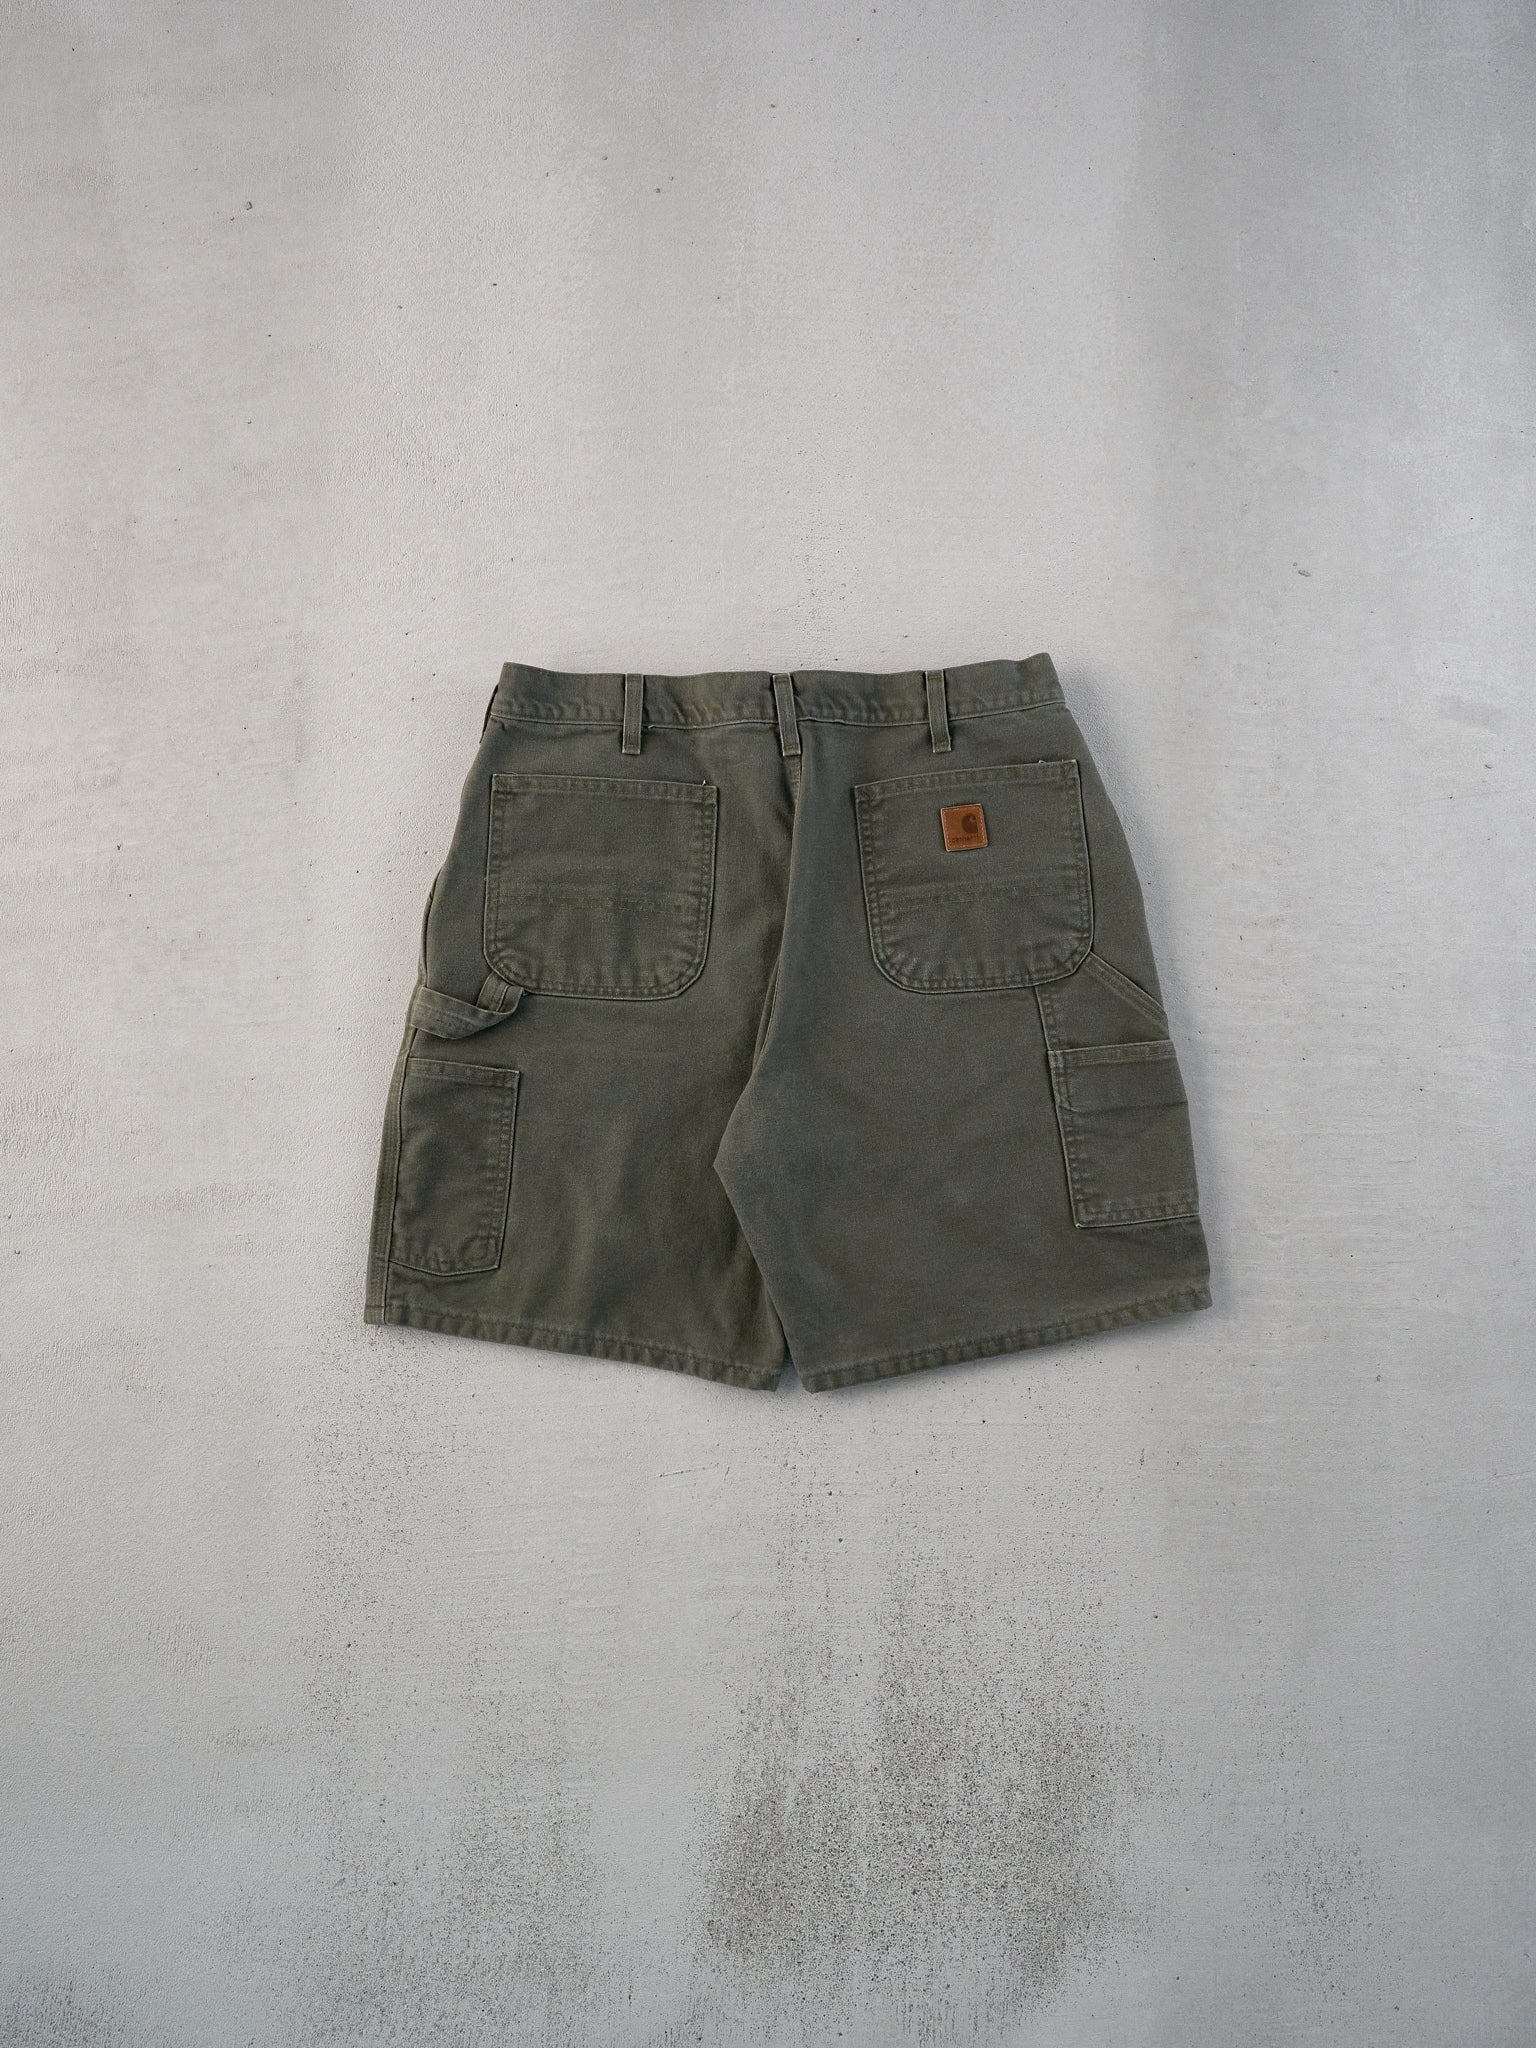 Vintage 90s Sage Green Carhartt Workwear Shorts (34x8)